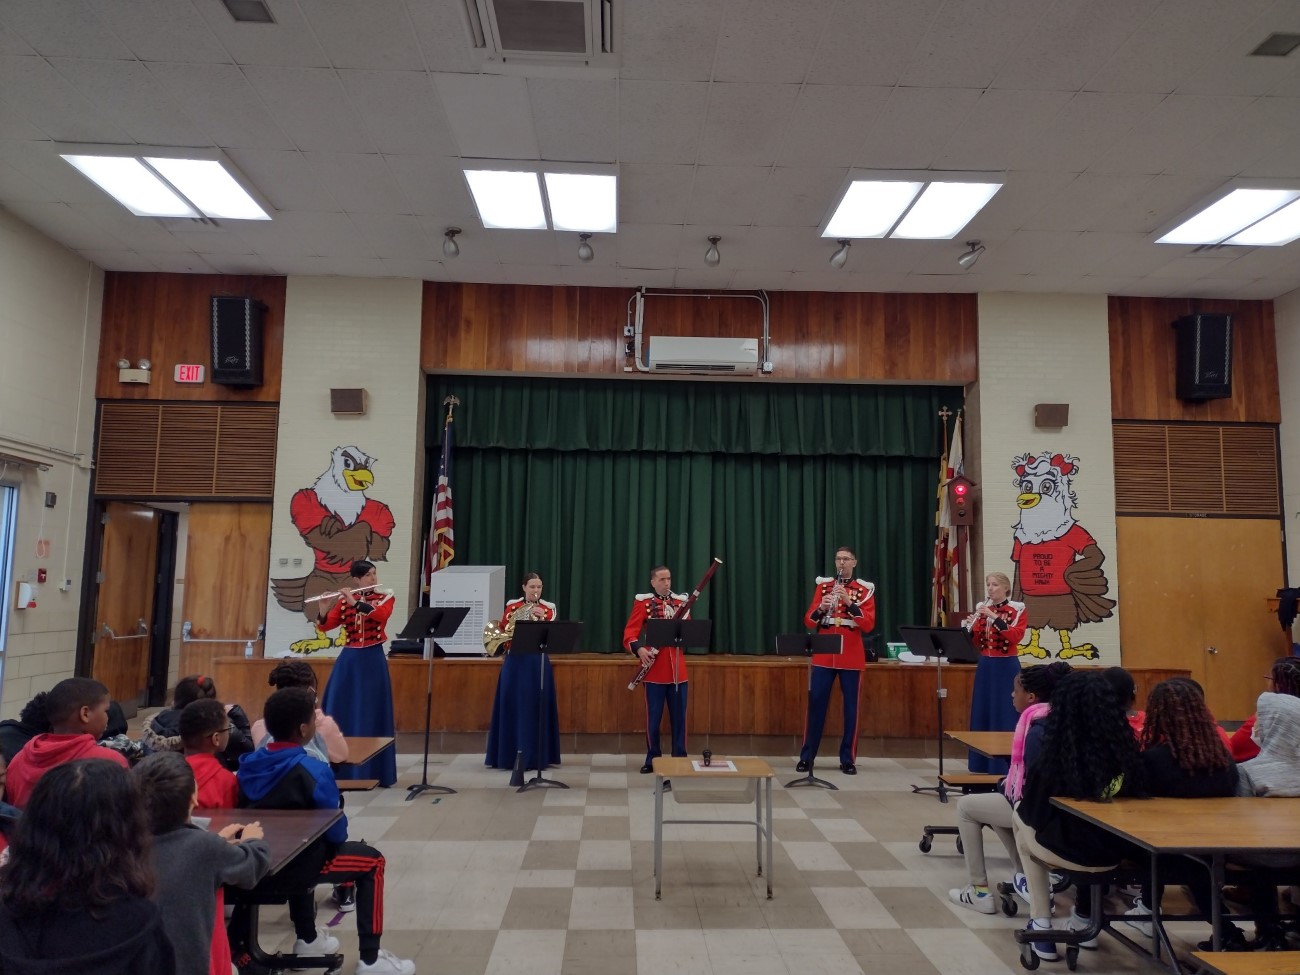 US-Marine-Band-playing-at-school-assembly.jpeg